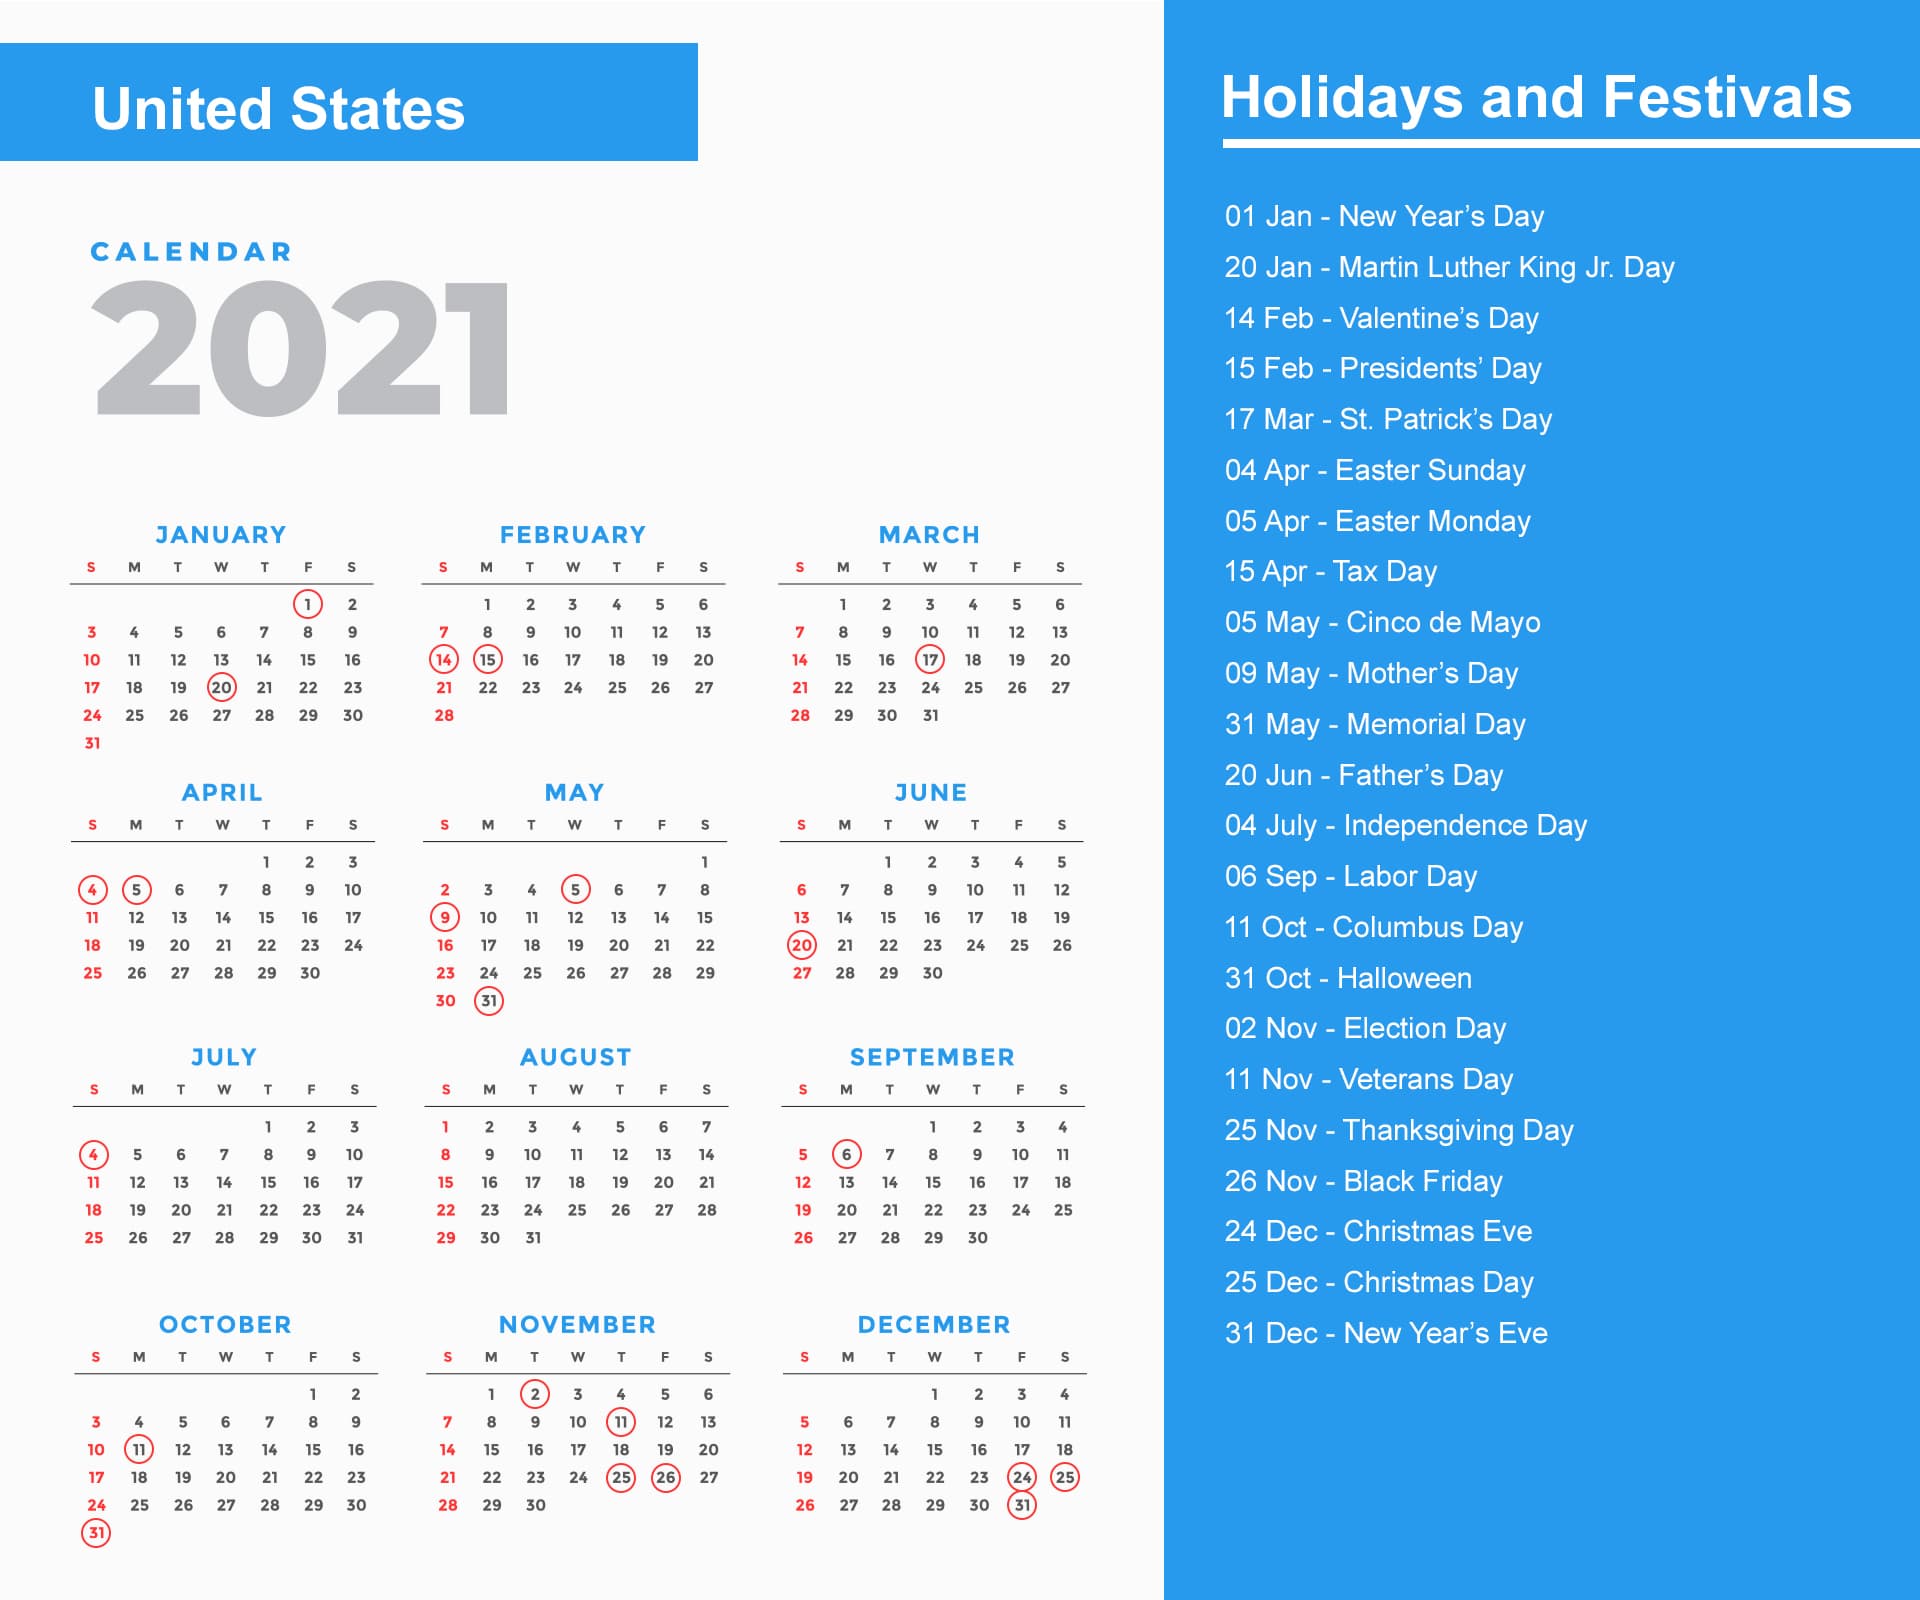 United States Holidays Calendar 2021